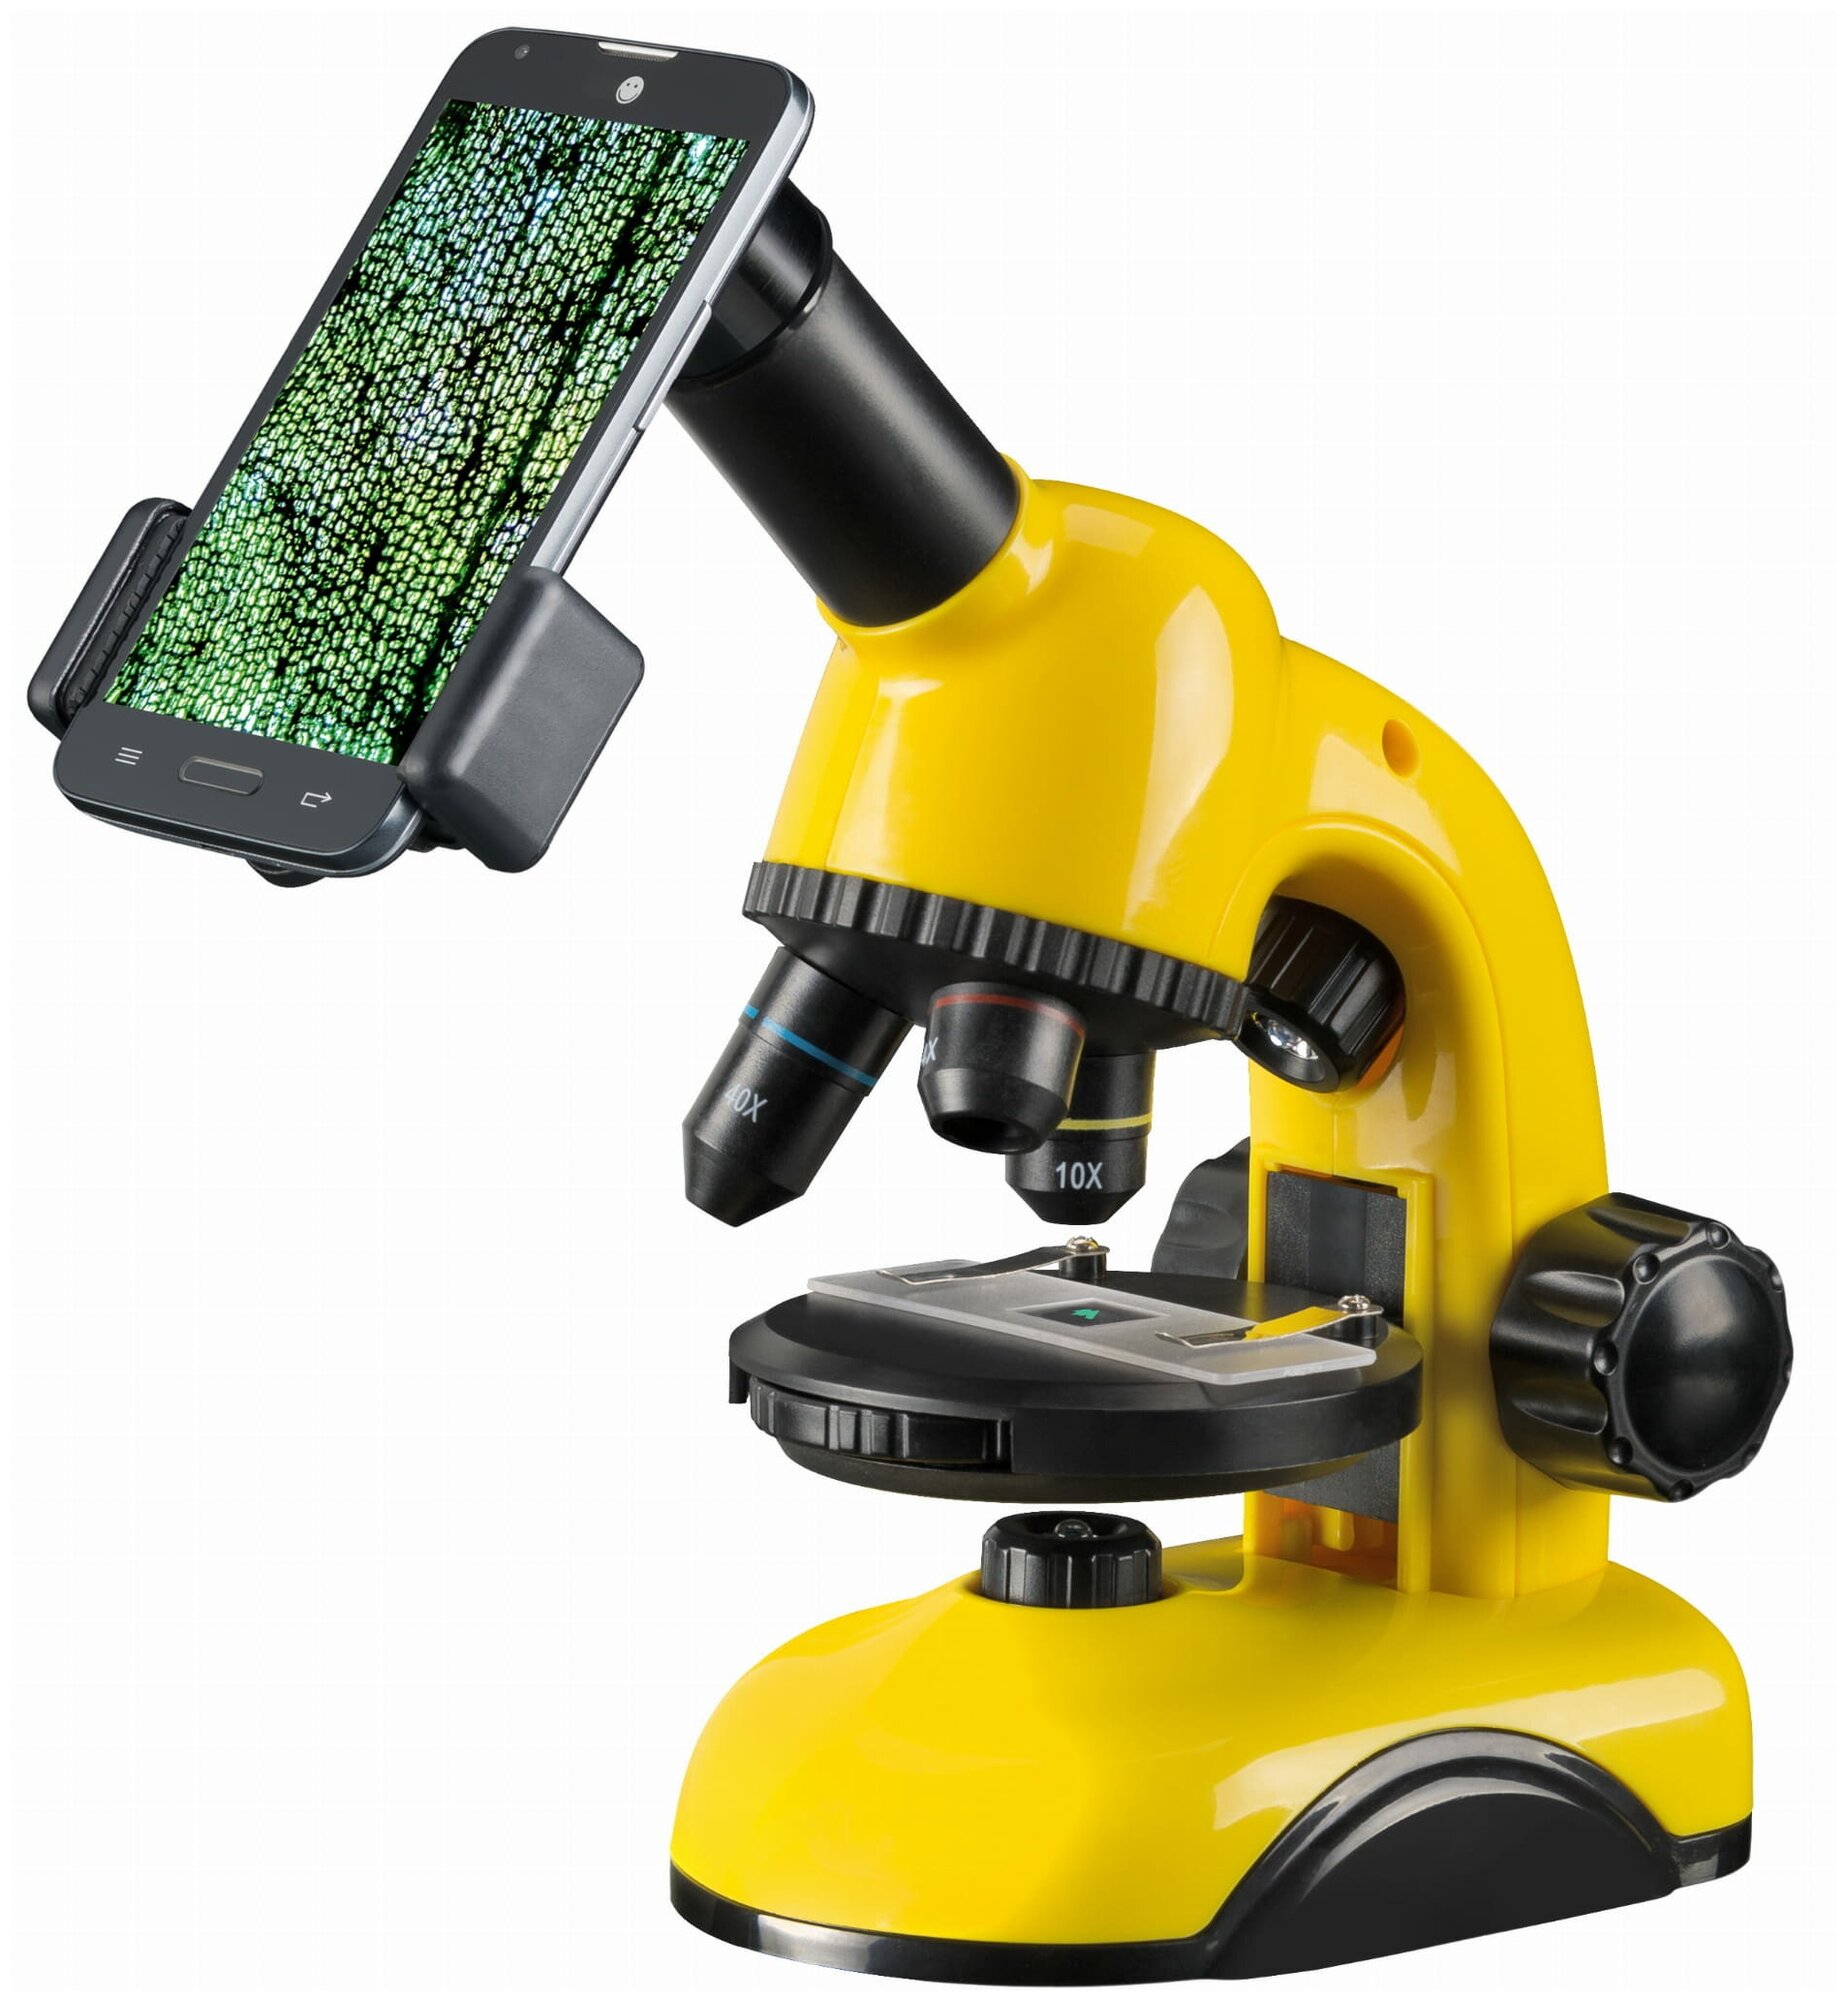 Bresser Микроскоп National Geographic 40x-800x. Цвет: желто-черный